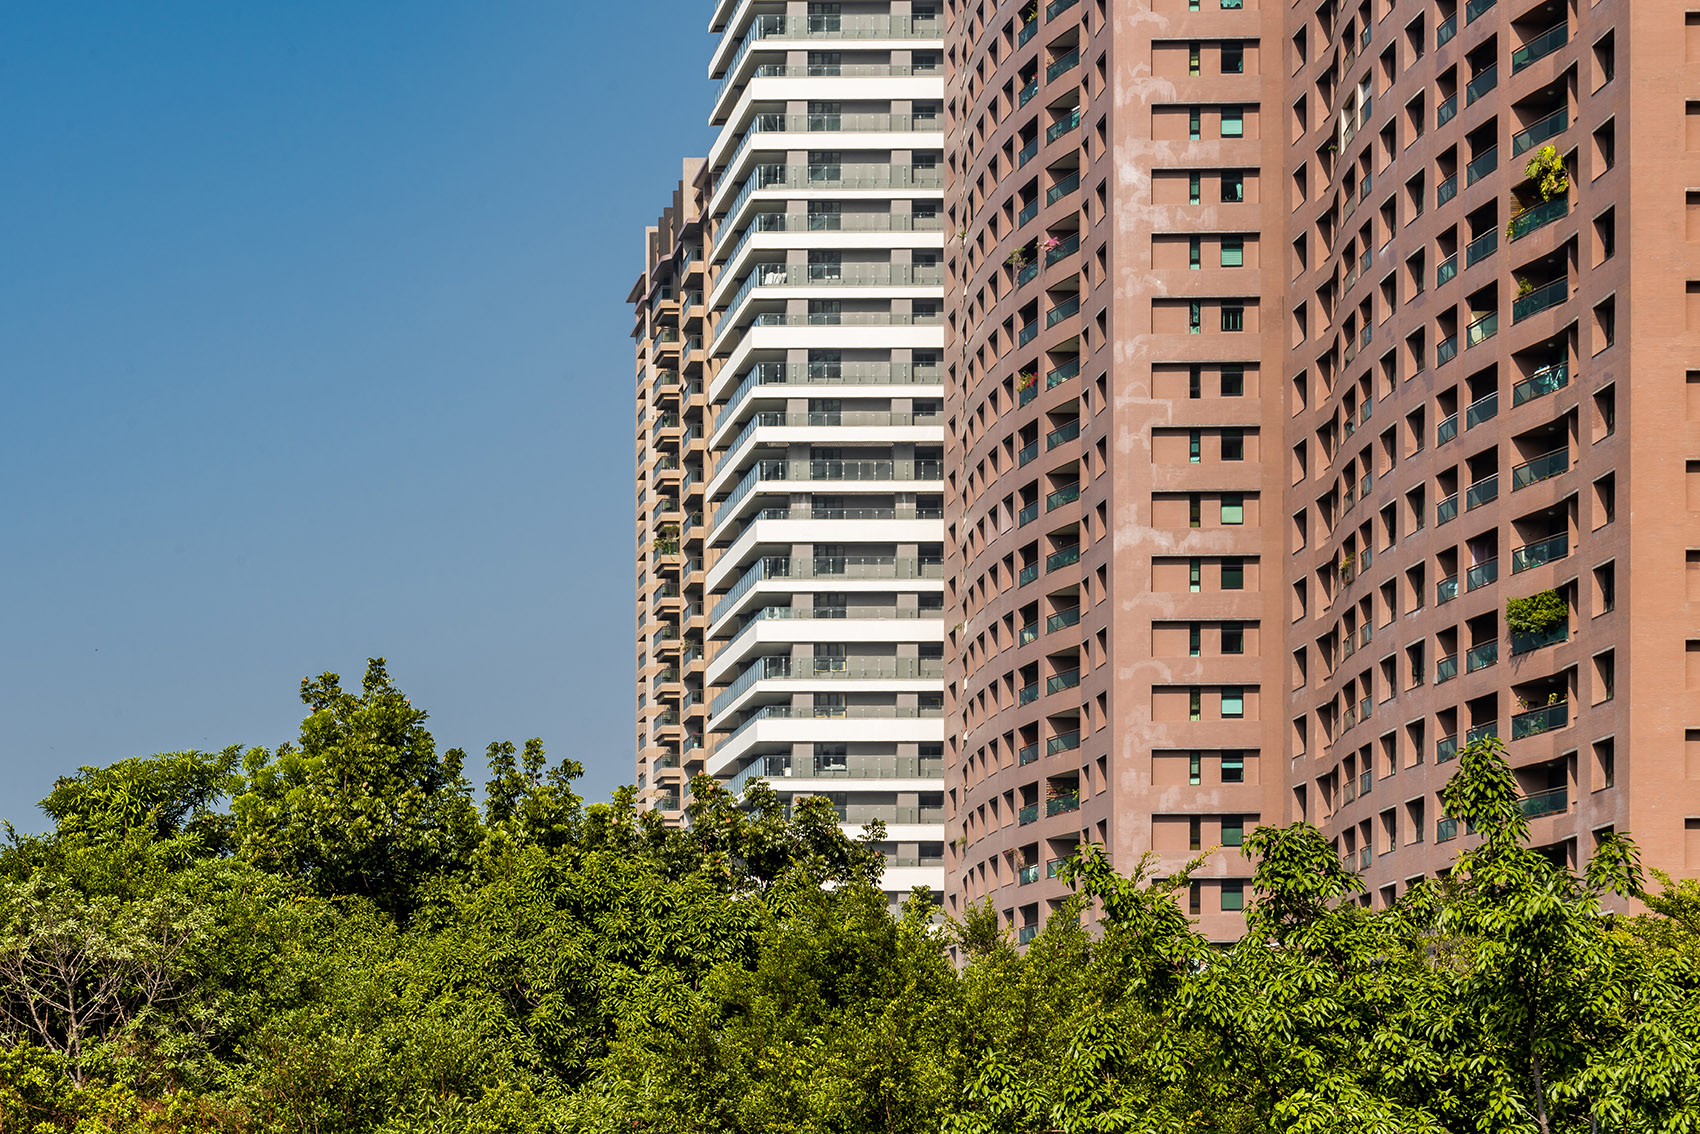 One More住宅楼，台湾/城市环境中的自然生活-47